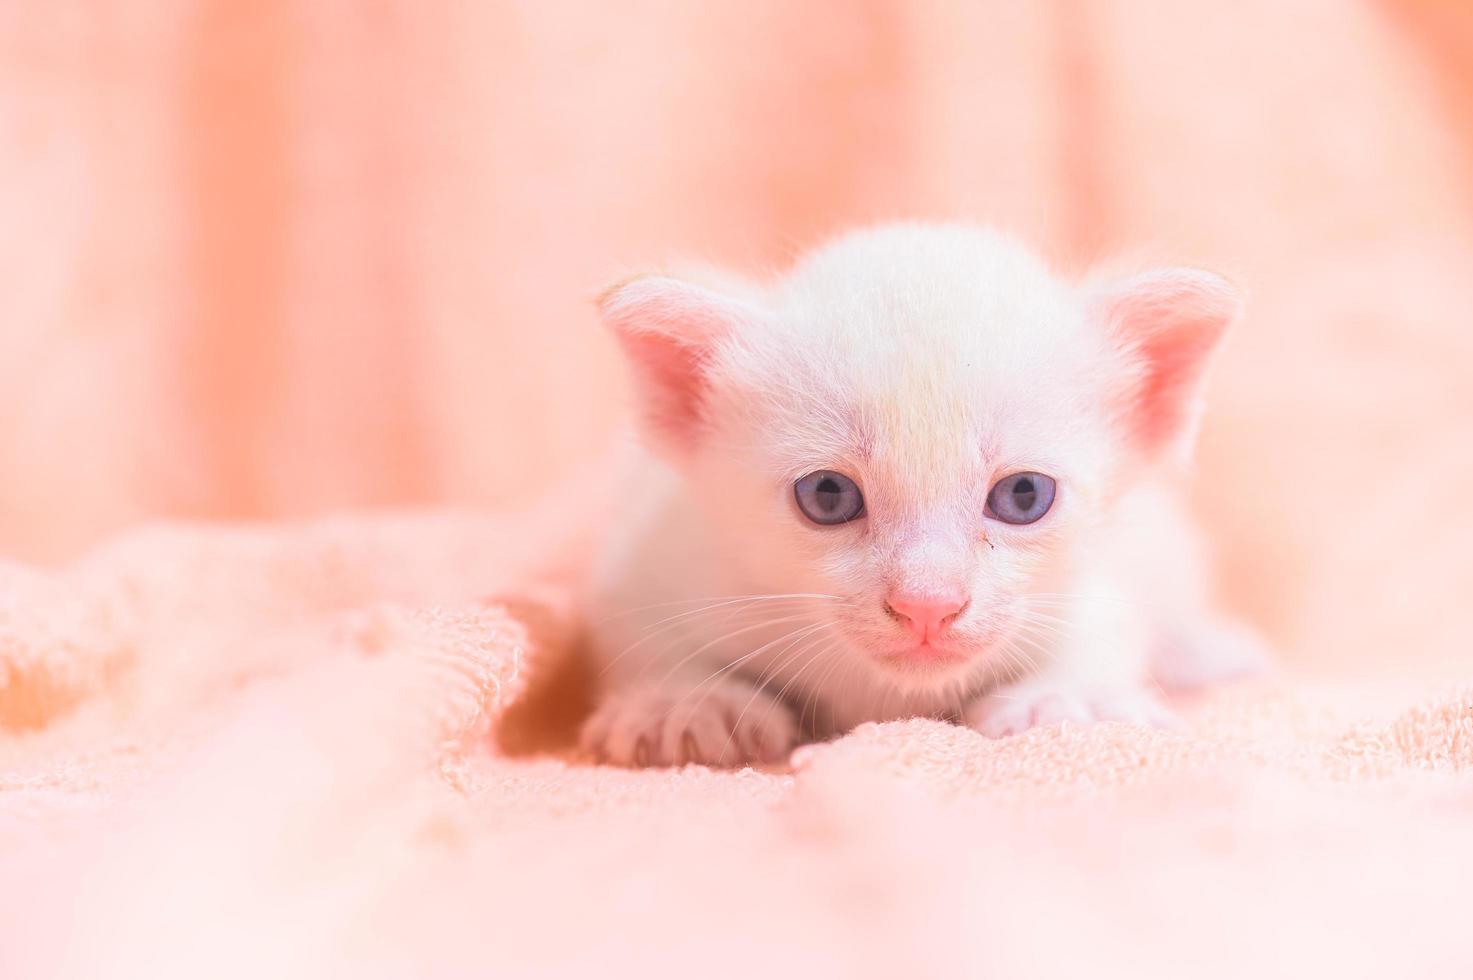 A cute kitten on a towel photo